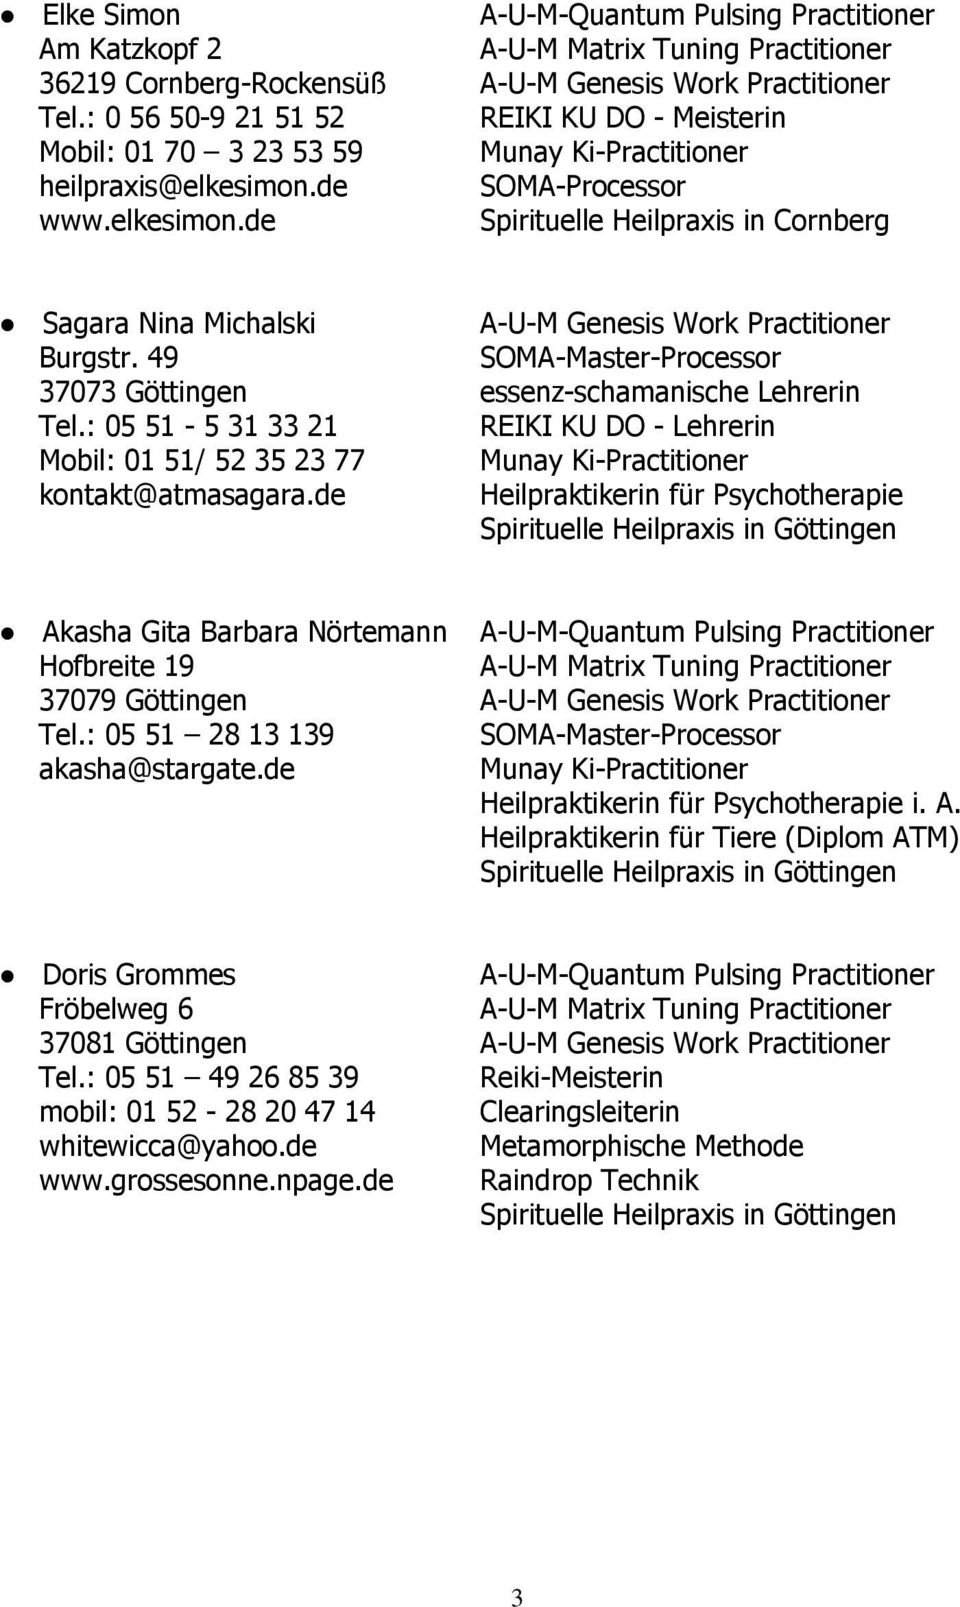 49 SOMA-Master-Processor 37073 Göttingen essenz-schamanische Lehrerin Tel.: 05 51-5 31 33 21 REIKI KU DO - Lehrerin Mobil: 01 51/ 52 35 23 77 kontakt@atmasagara.